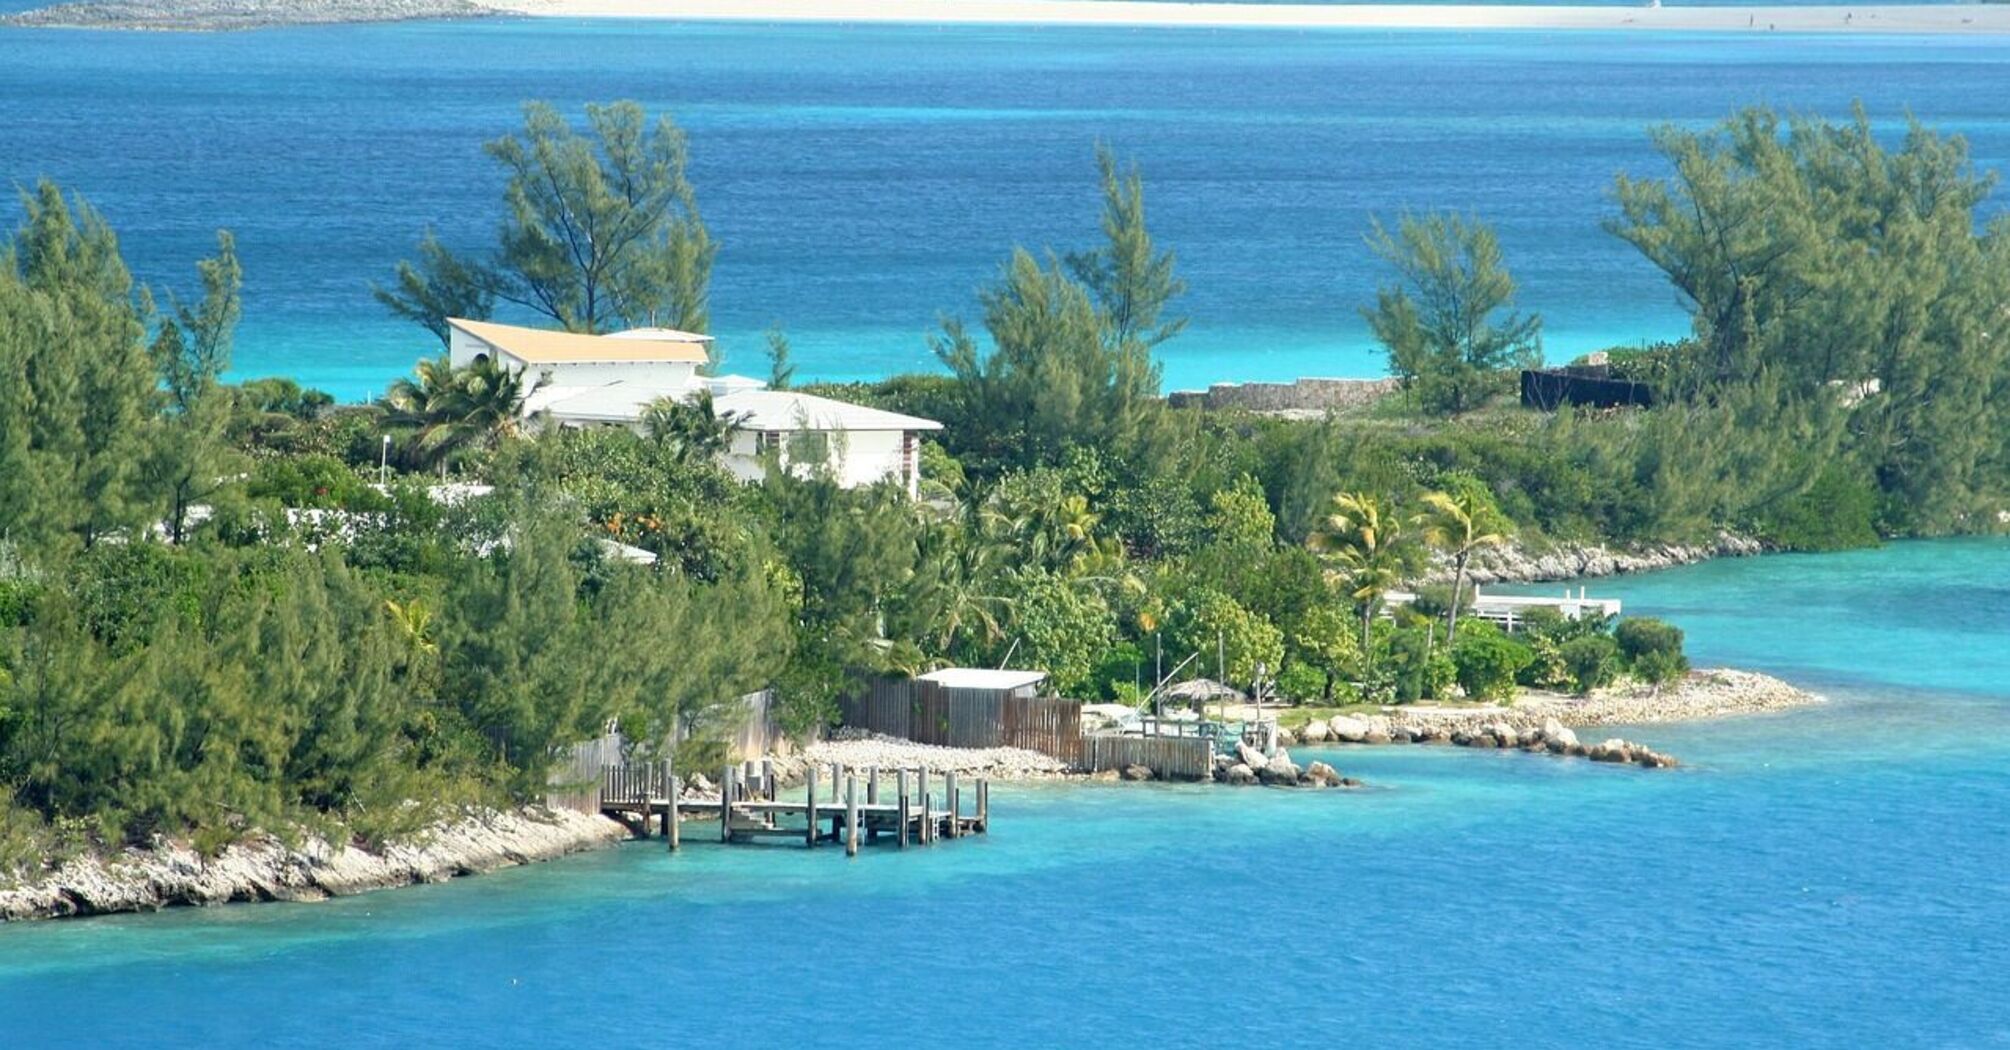 Jamaica and the Bahamas respond to US travel advisories